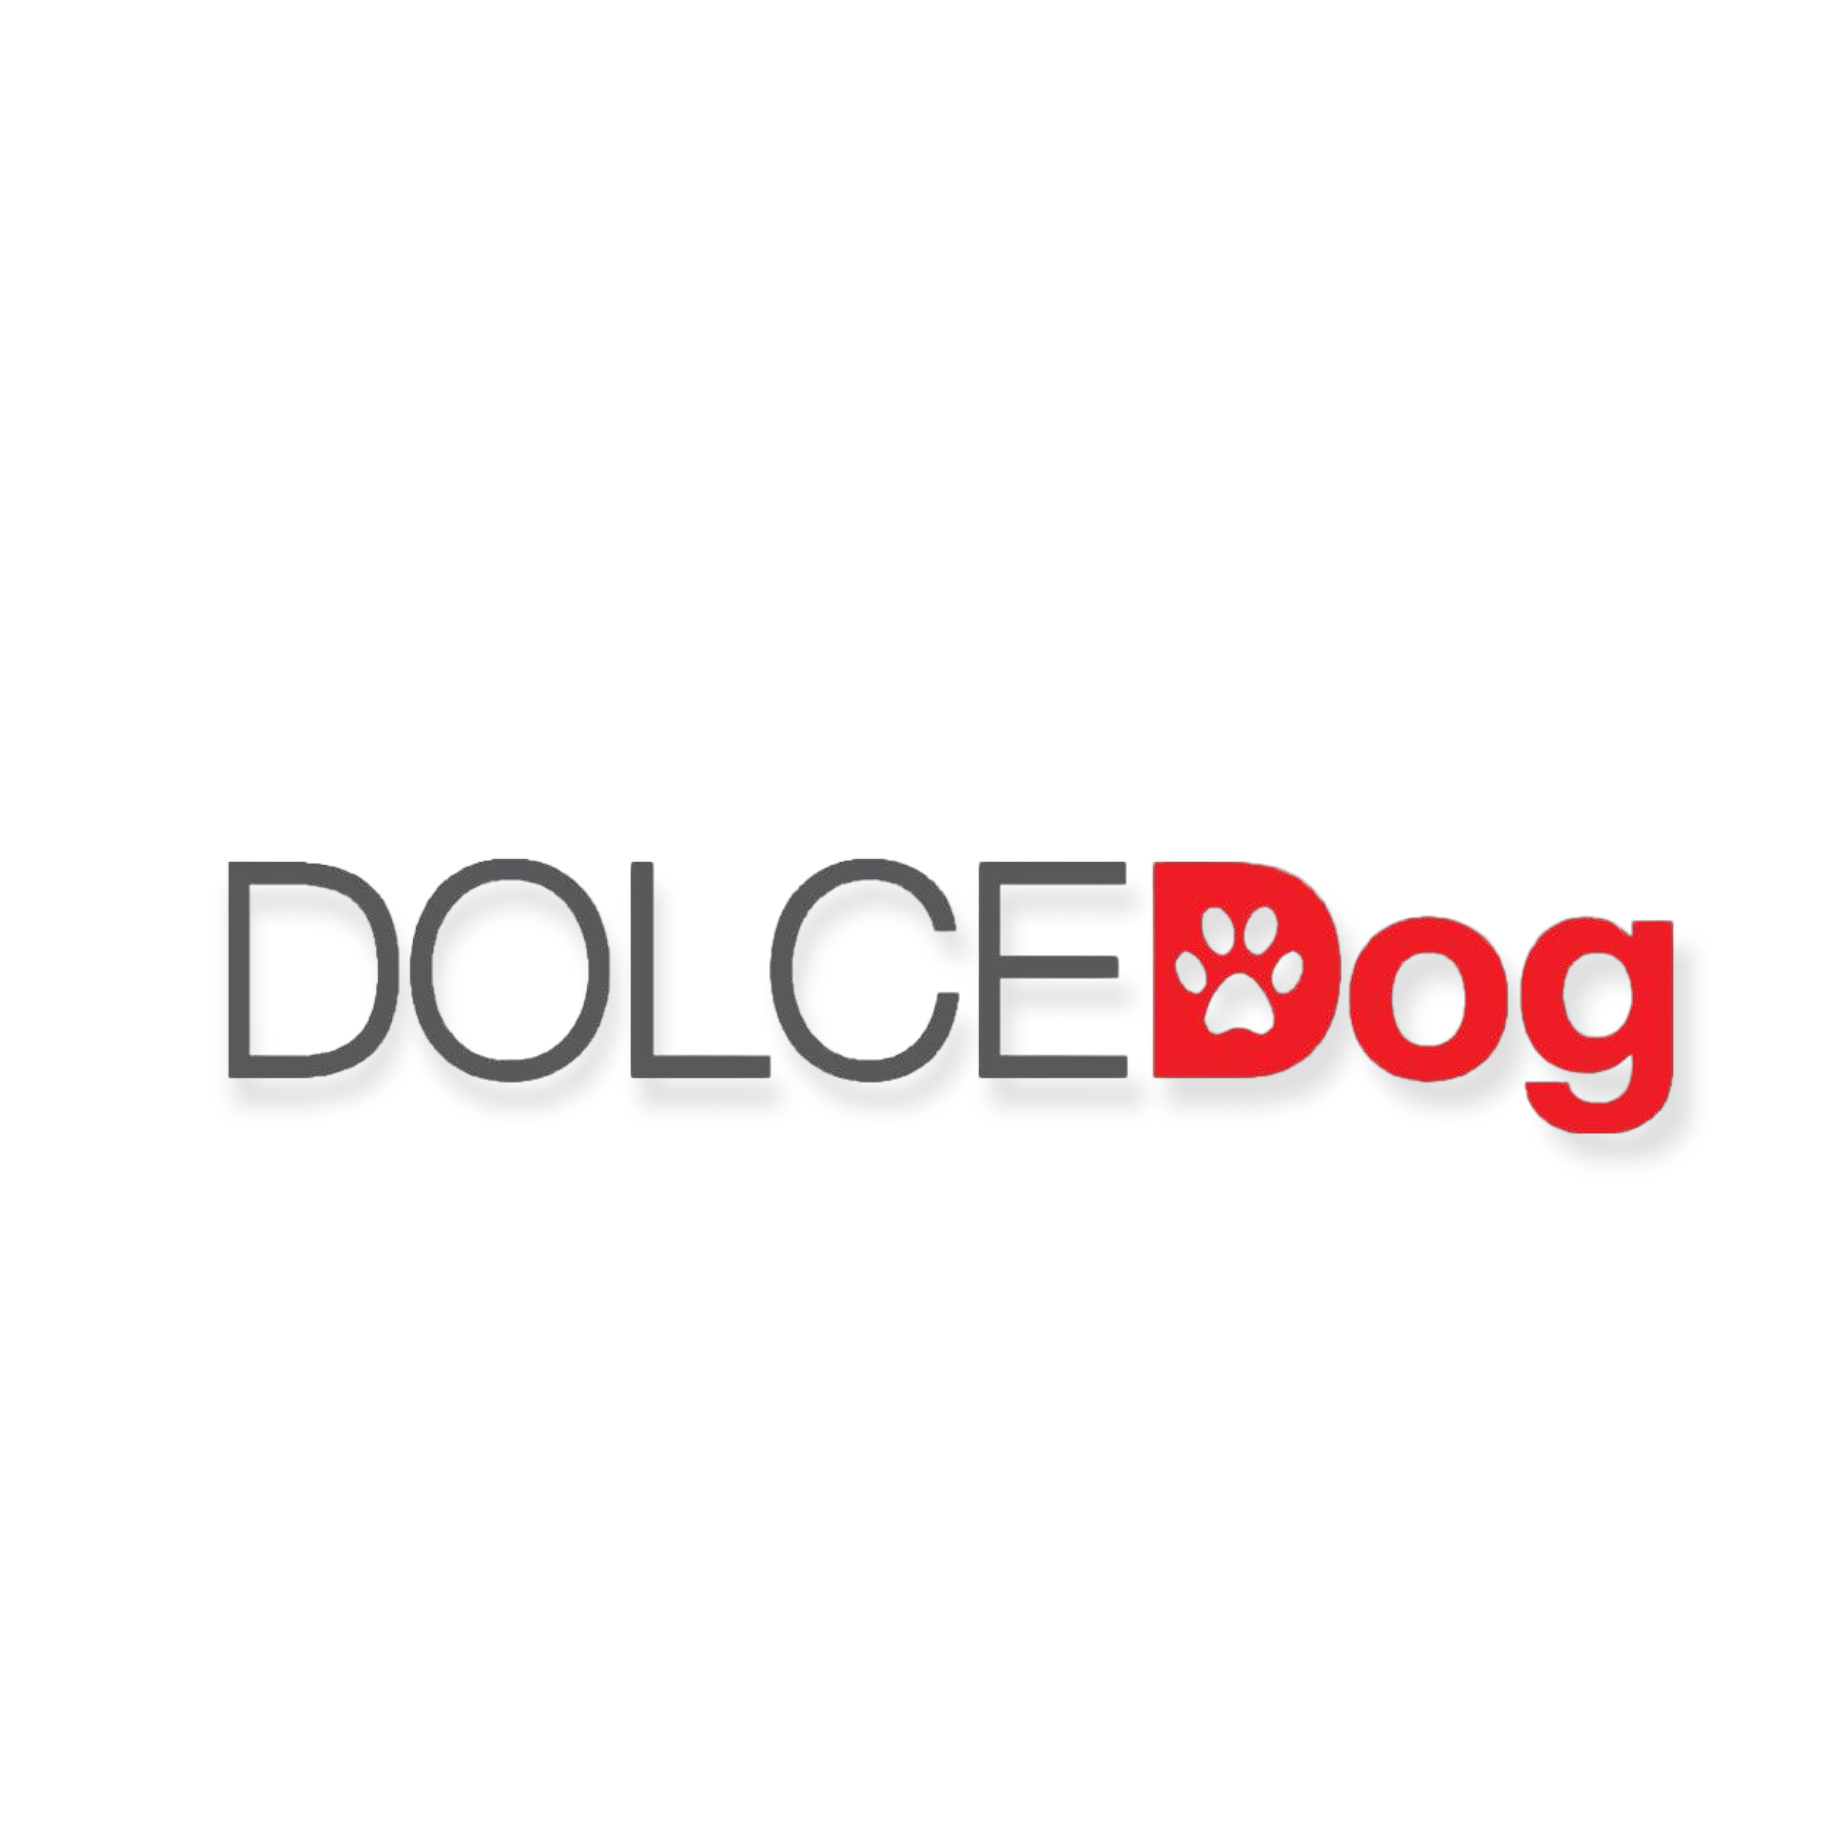 Dolce Dog Logo.jpg